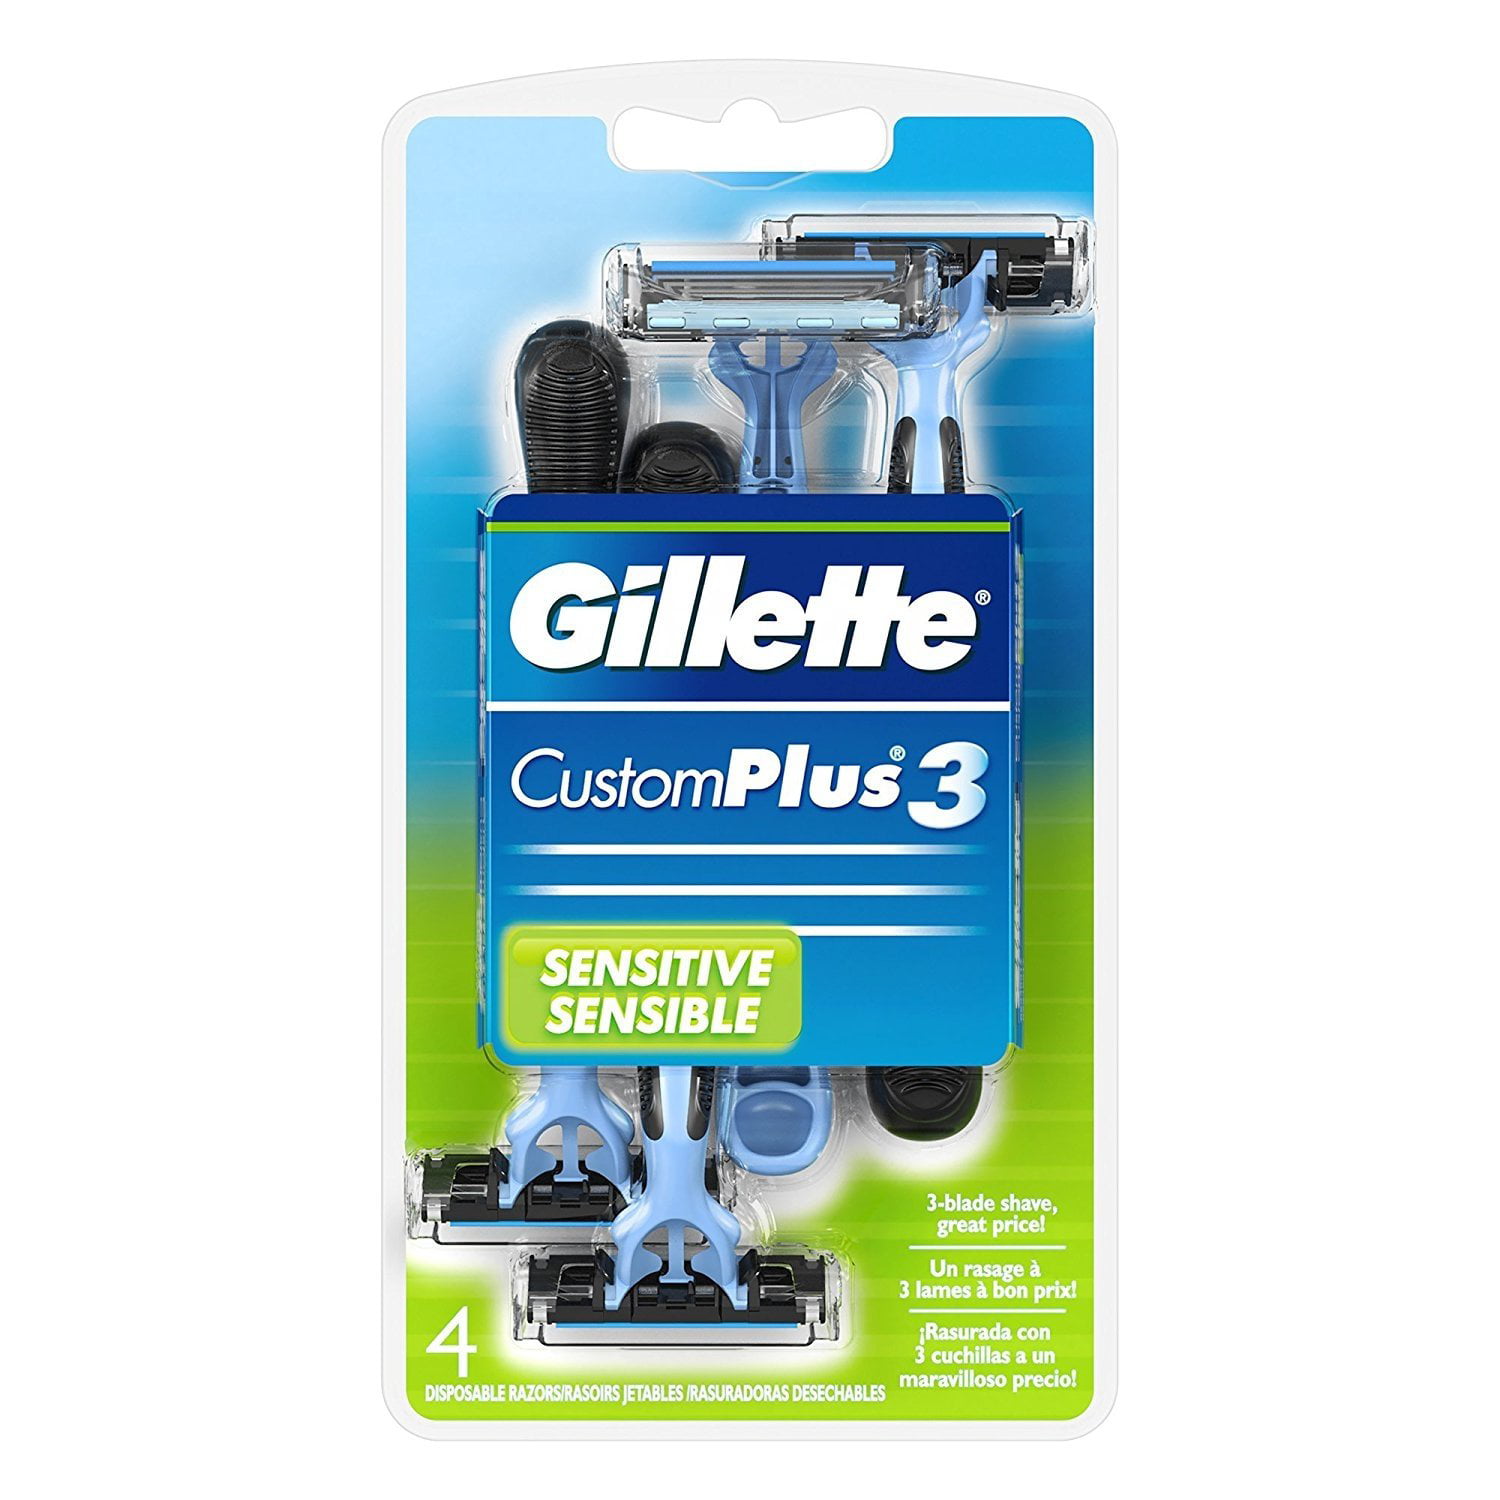 Gillette CustomPlus 3 Disposable Razor, Sensitive, 4 Count